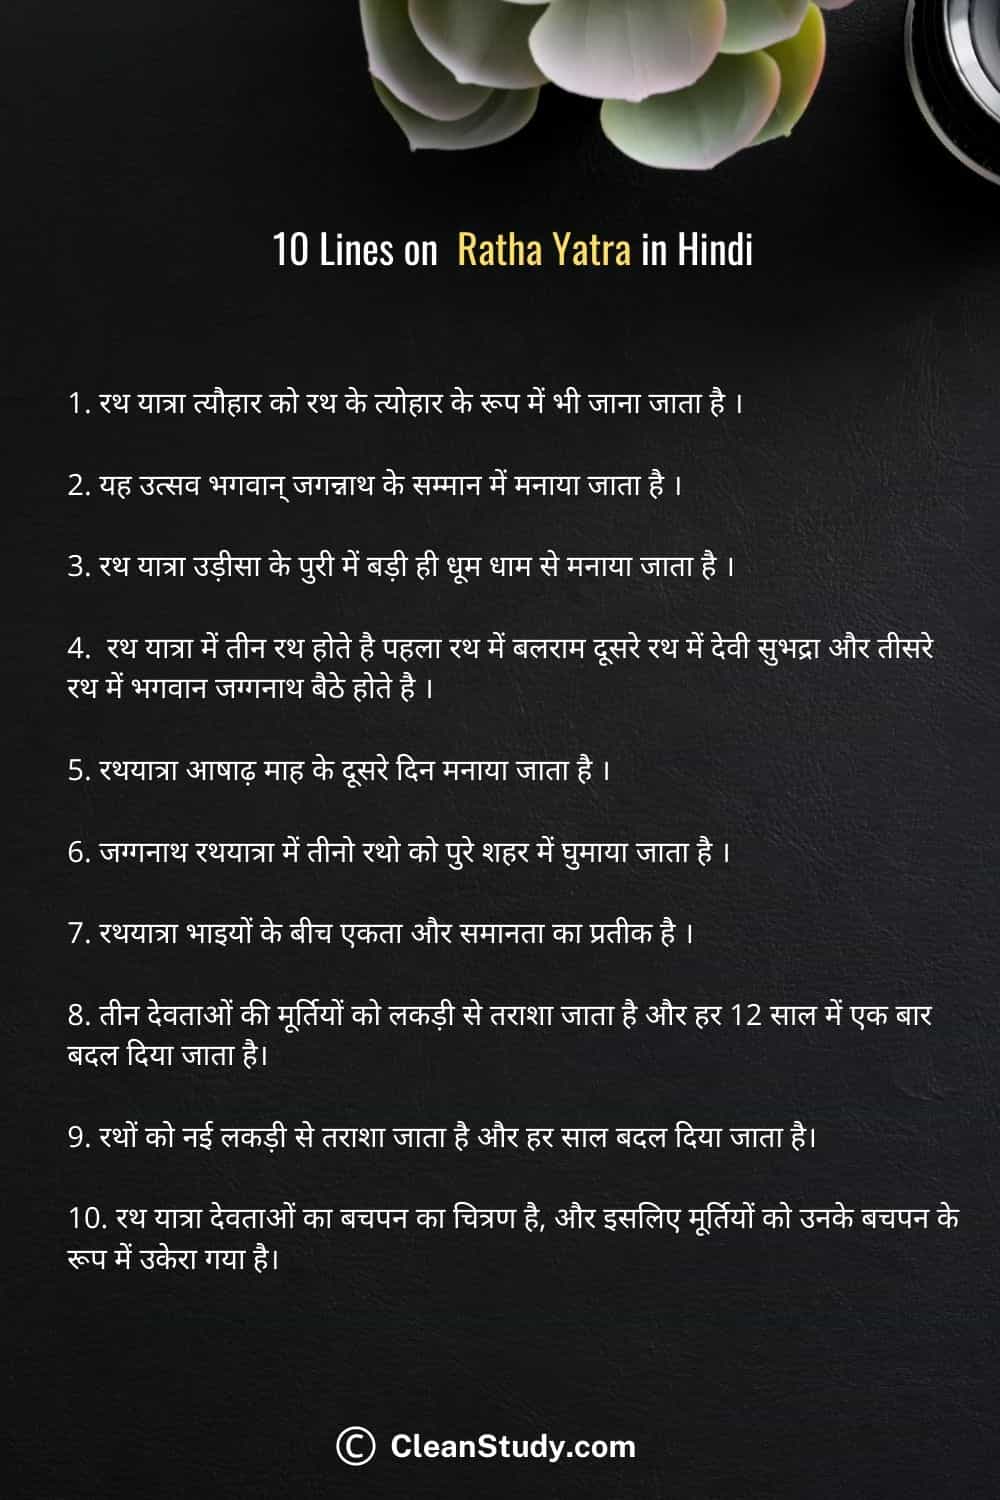 10 Lines On Ratha Yatra in Hindi